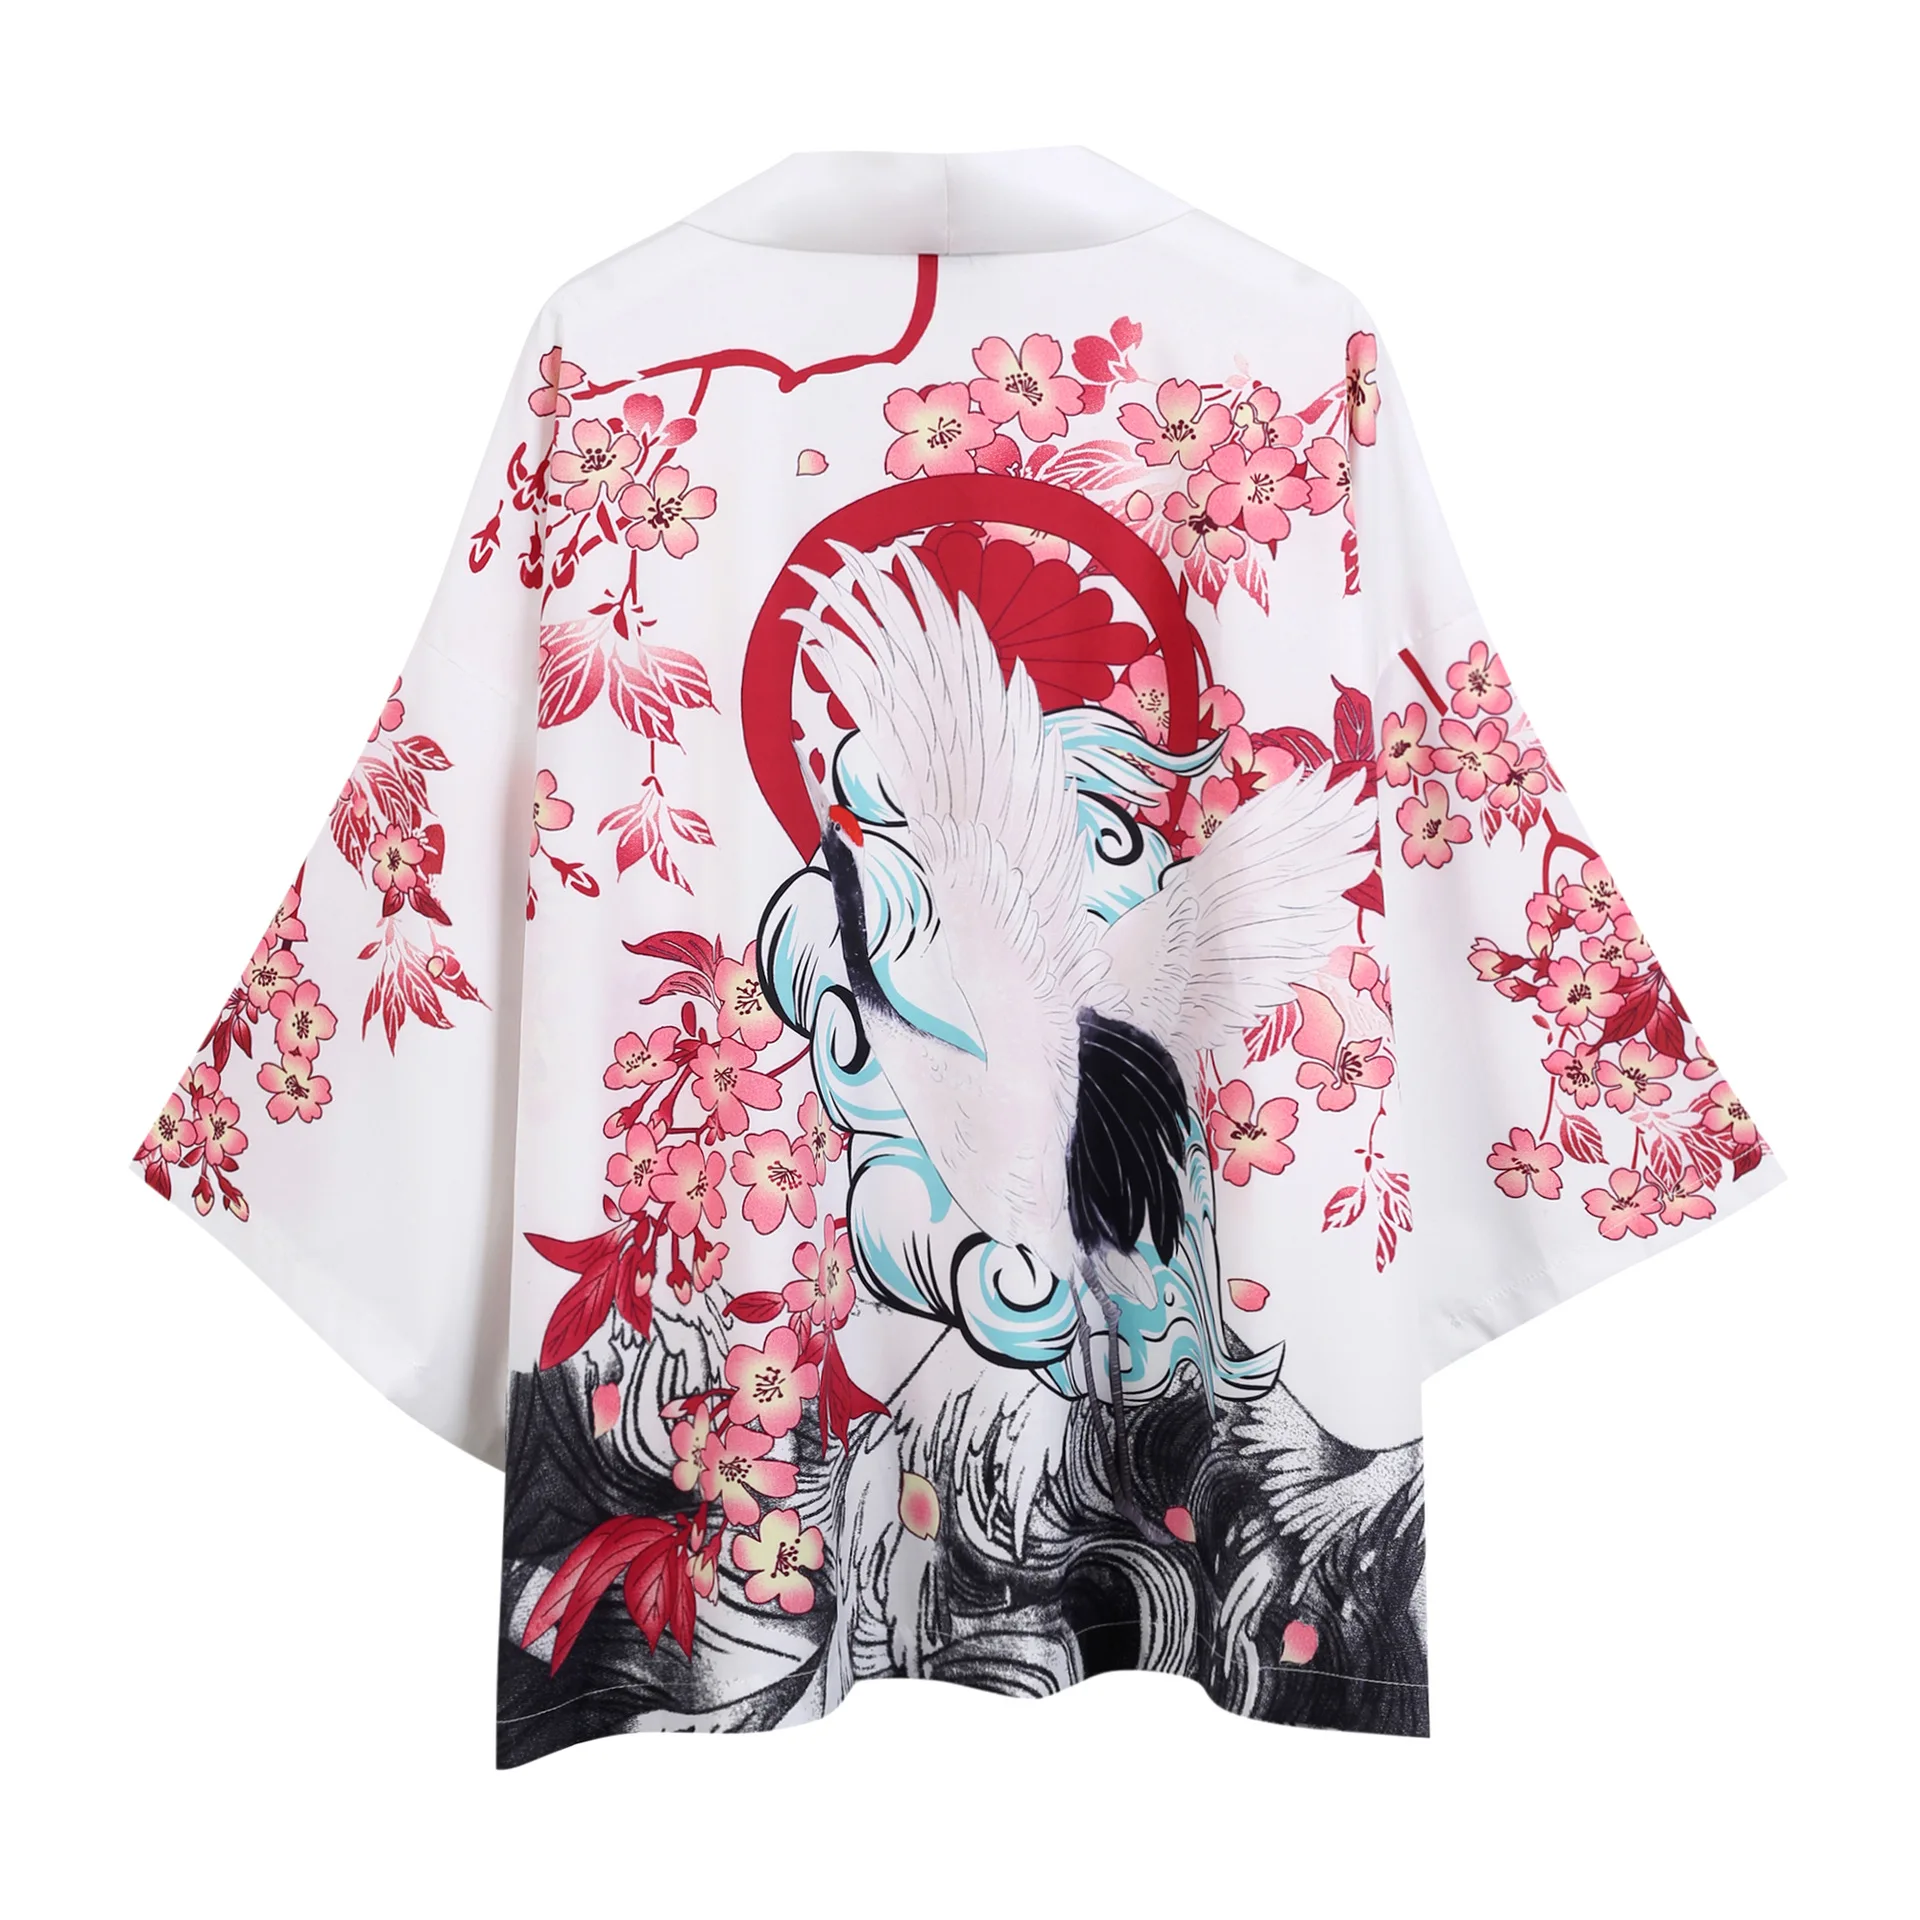 Традиционная мужская одежда Азиатский Дракон юката Самурай хаори японский стиль Ukiyo кардиган Харадзюку кимоно платье - Цвет: White 1